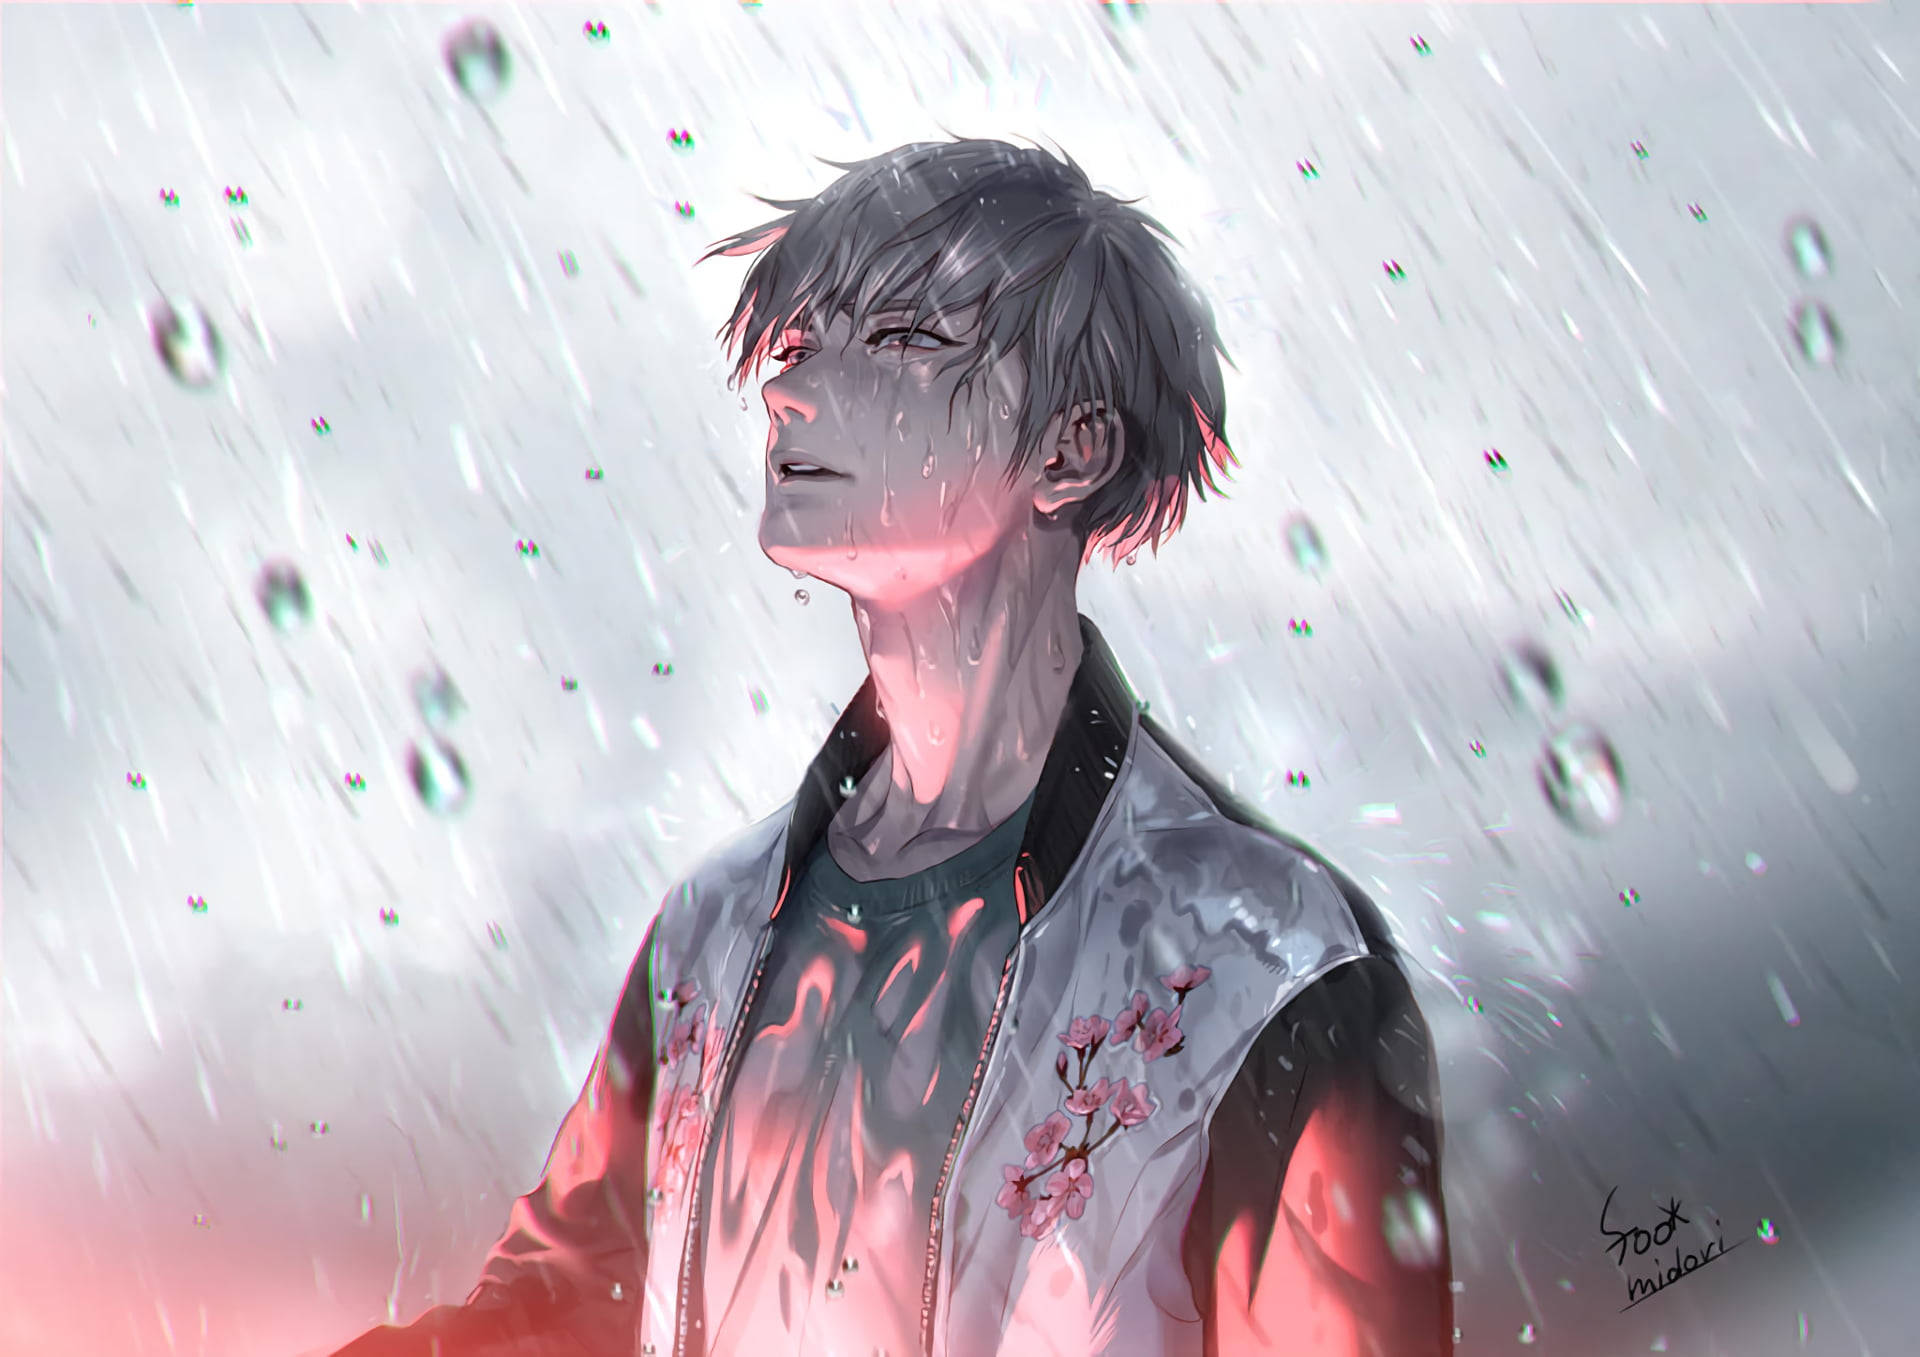 Alone Sad Anime Boys Soaked In The Rain Wallpaper